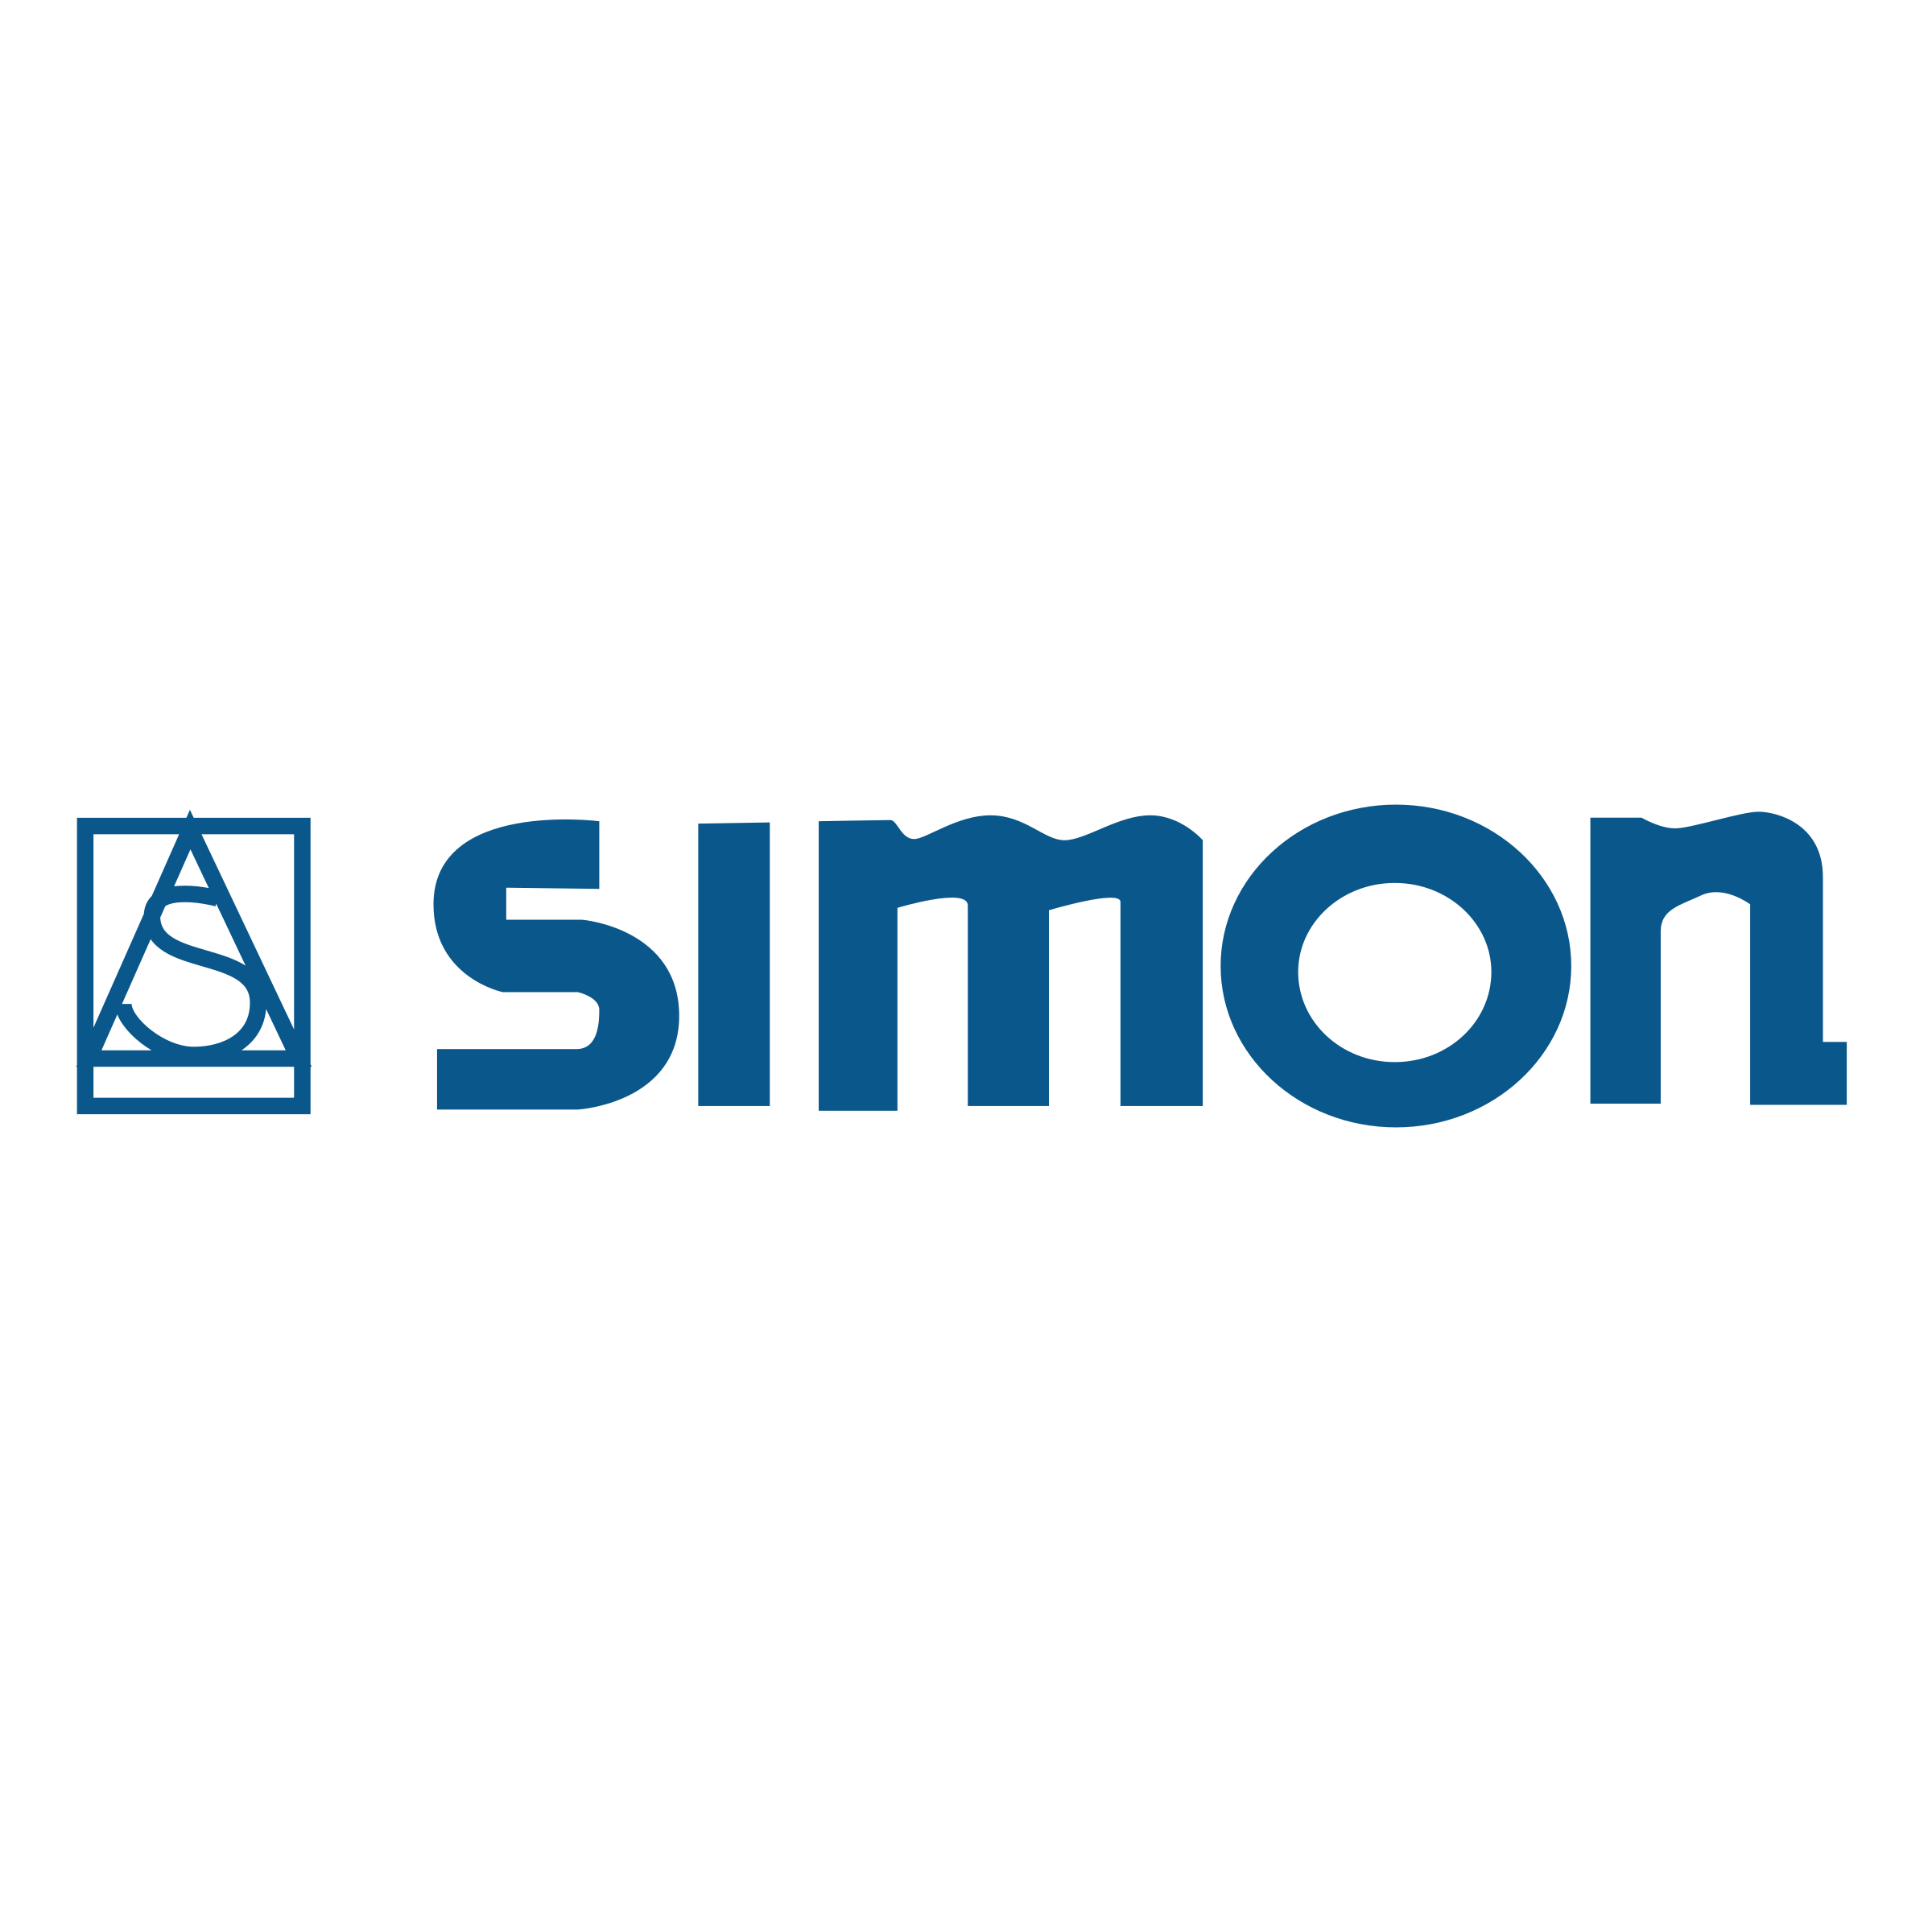 Simon Logo - Simon Logo PNG Transparent & SVG Vector - Freebie Supply